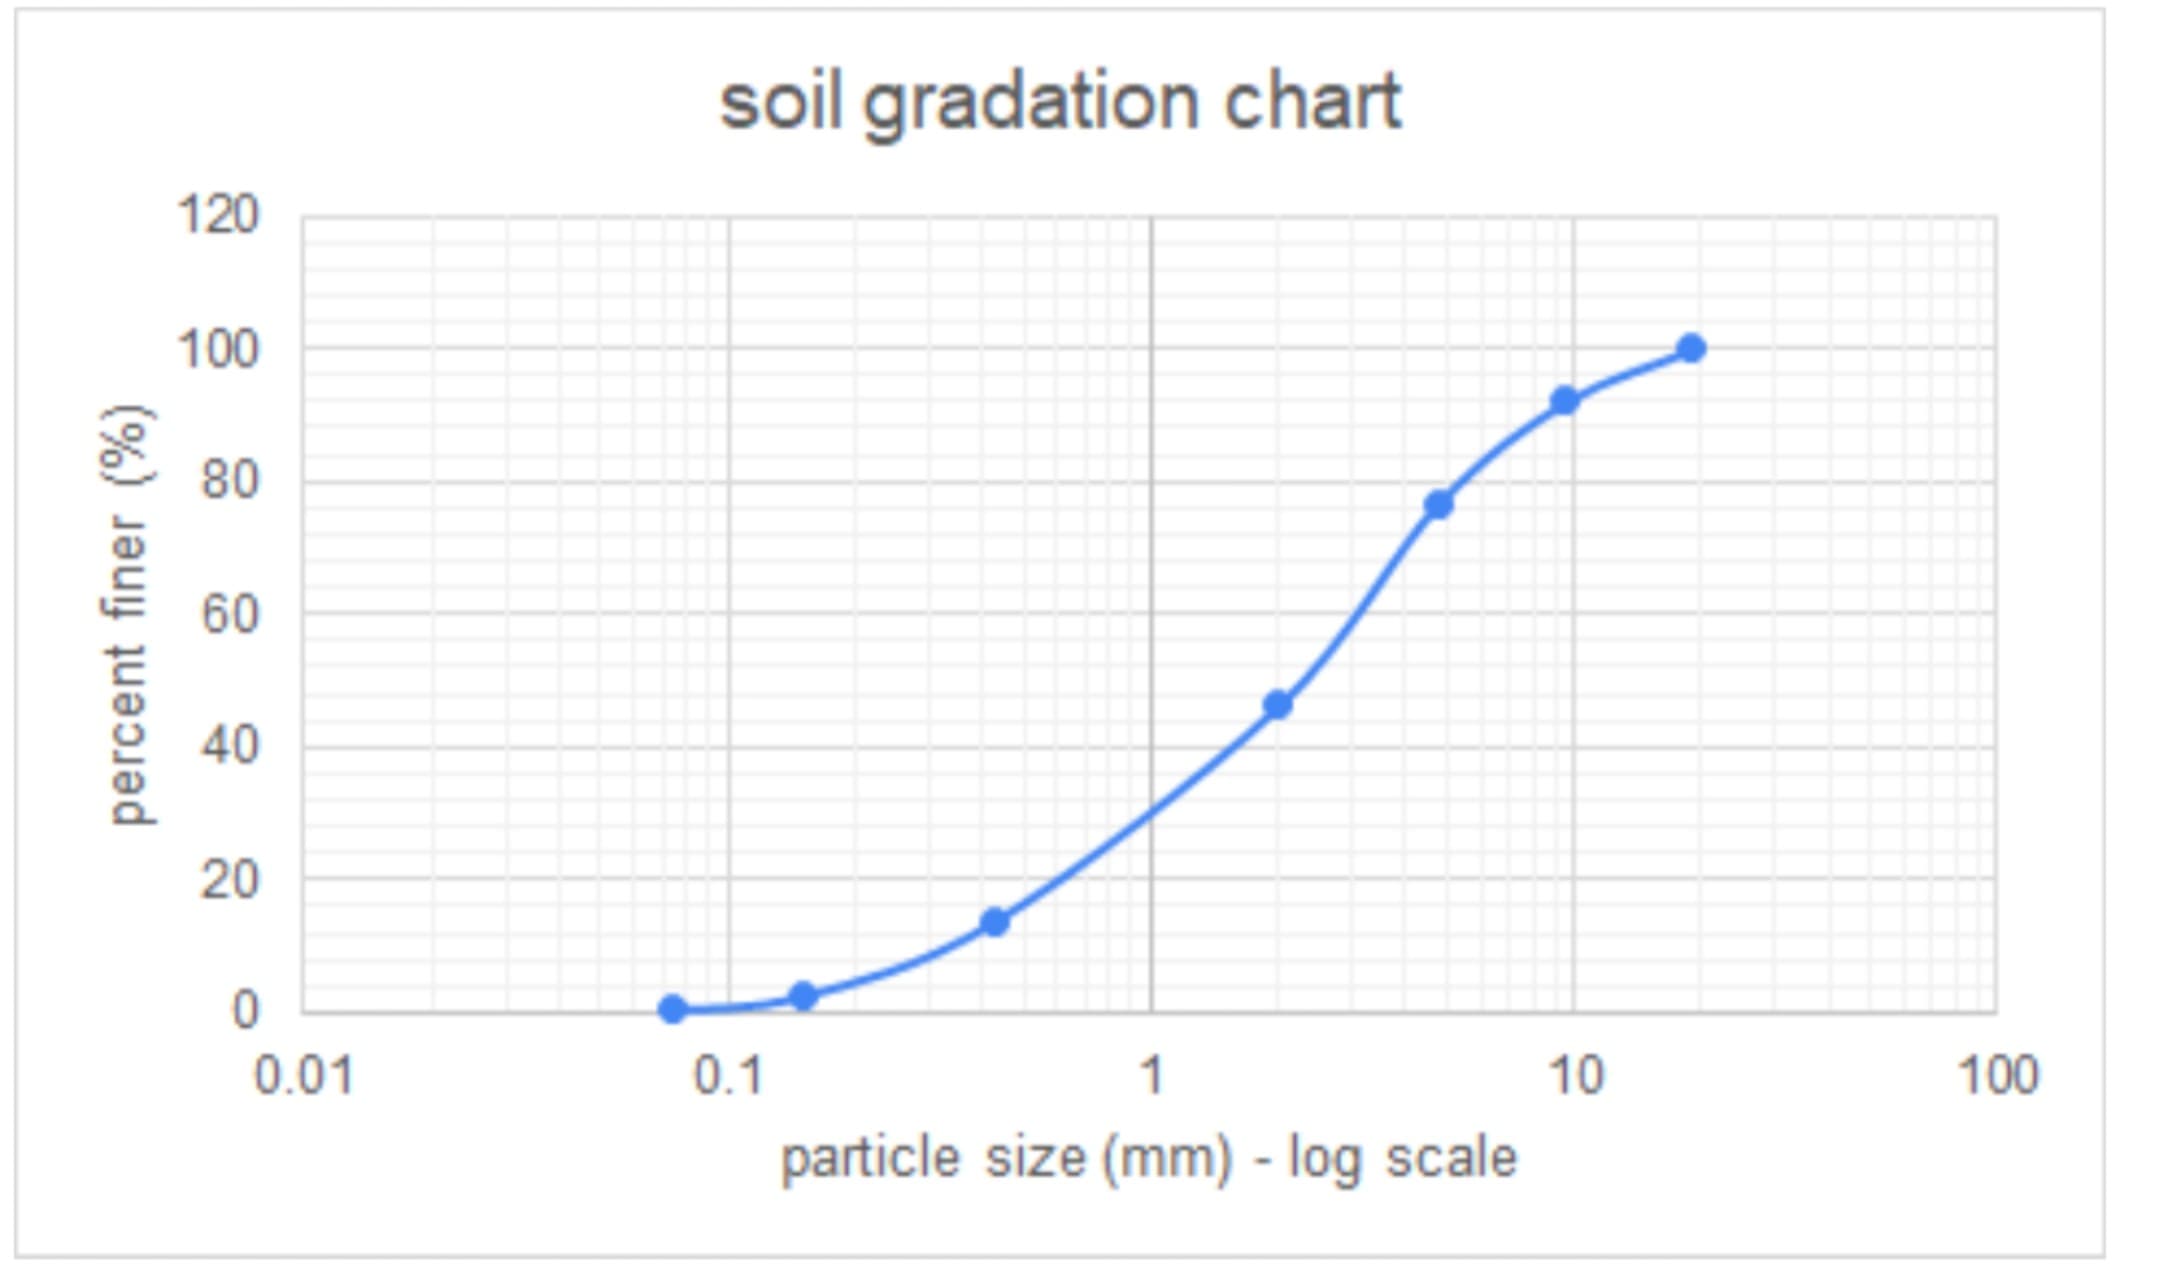 soil gradation chart
120
100
80
60
40
20
0.1
100
0.01
10
particle size (mm) - log scale
percent finer (%)
